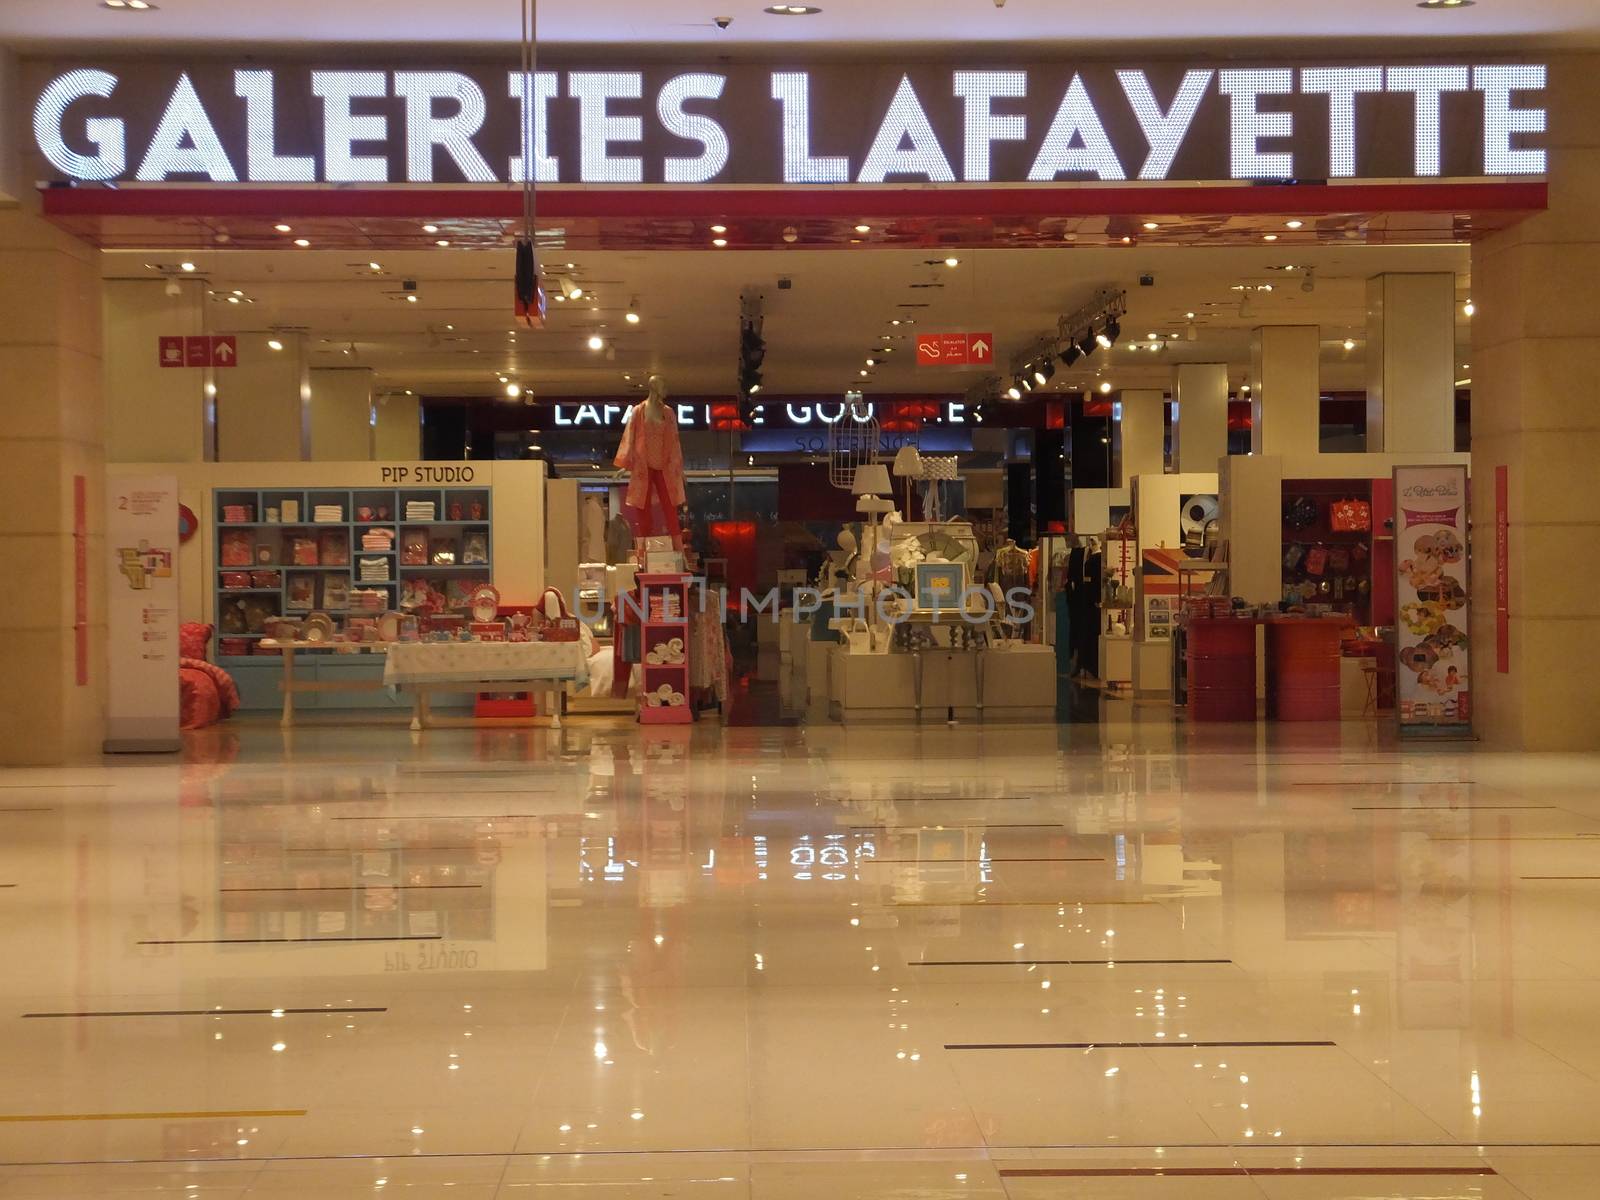 Galeries Lafayette at Dubai Mall in Dubai, UAE by sainaniritu